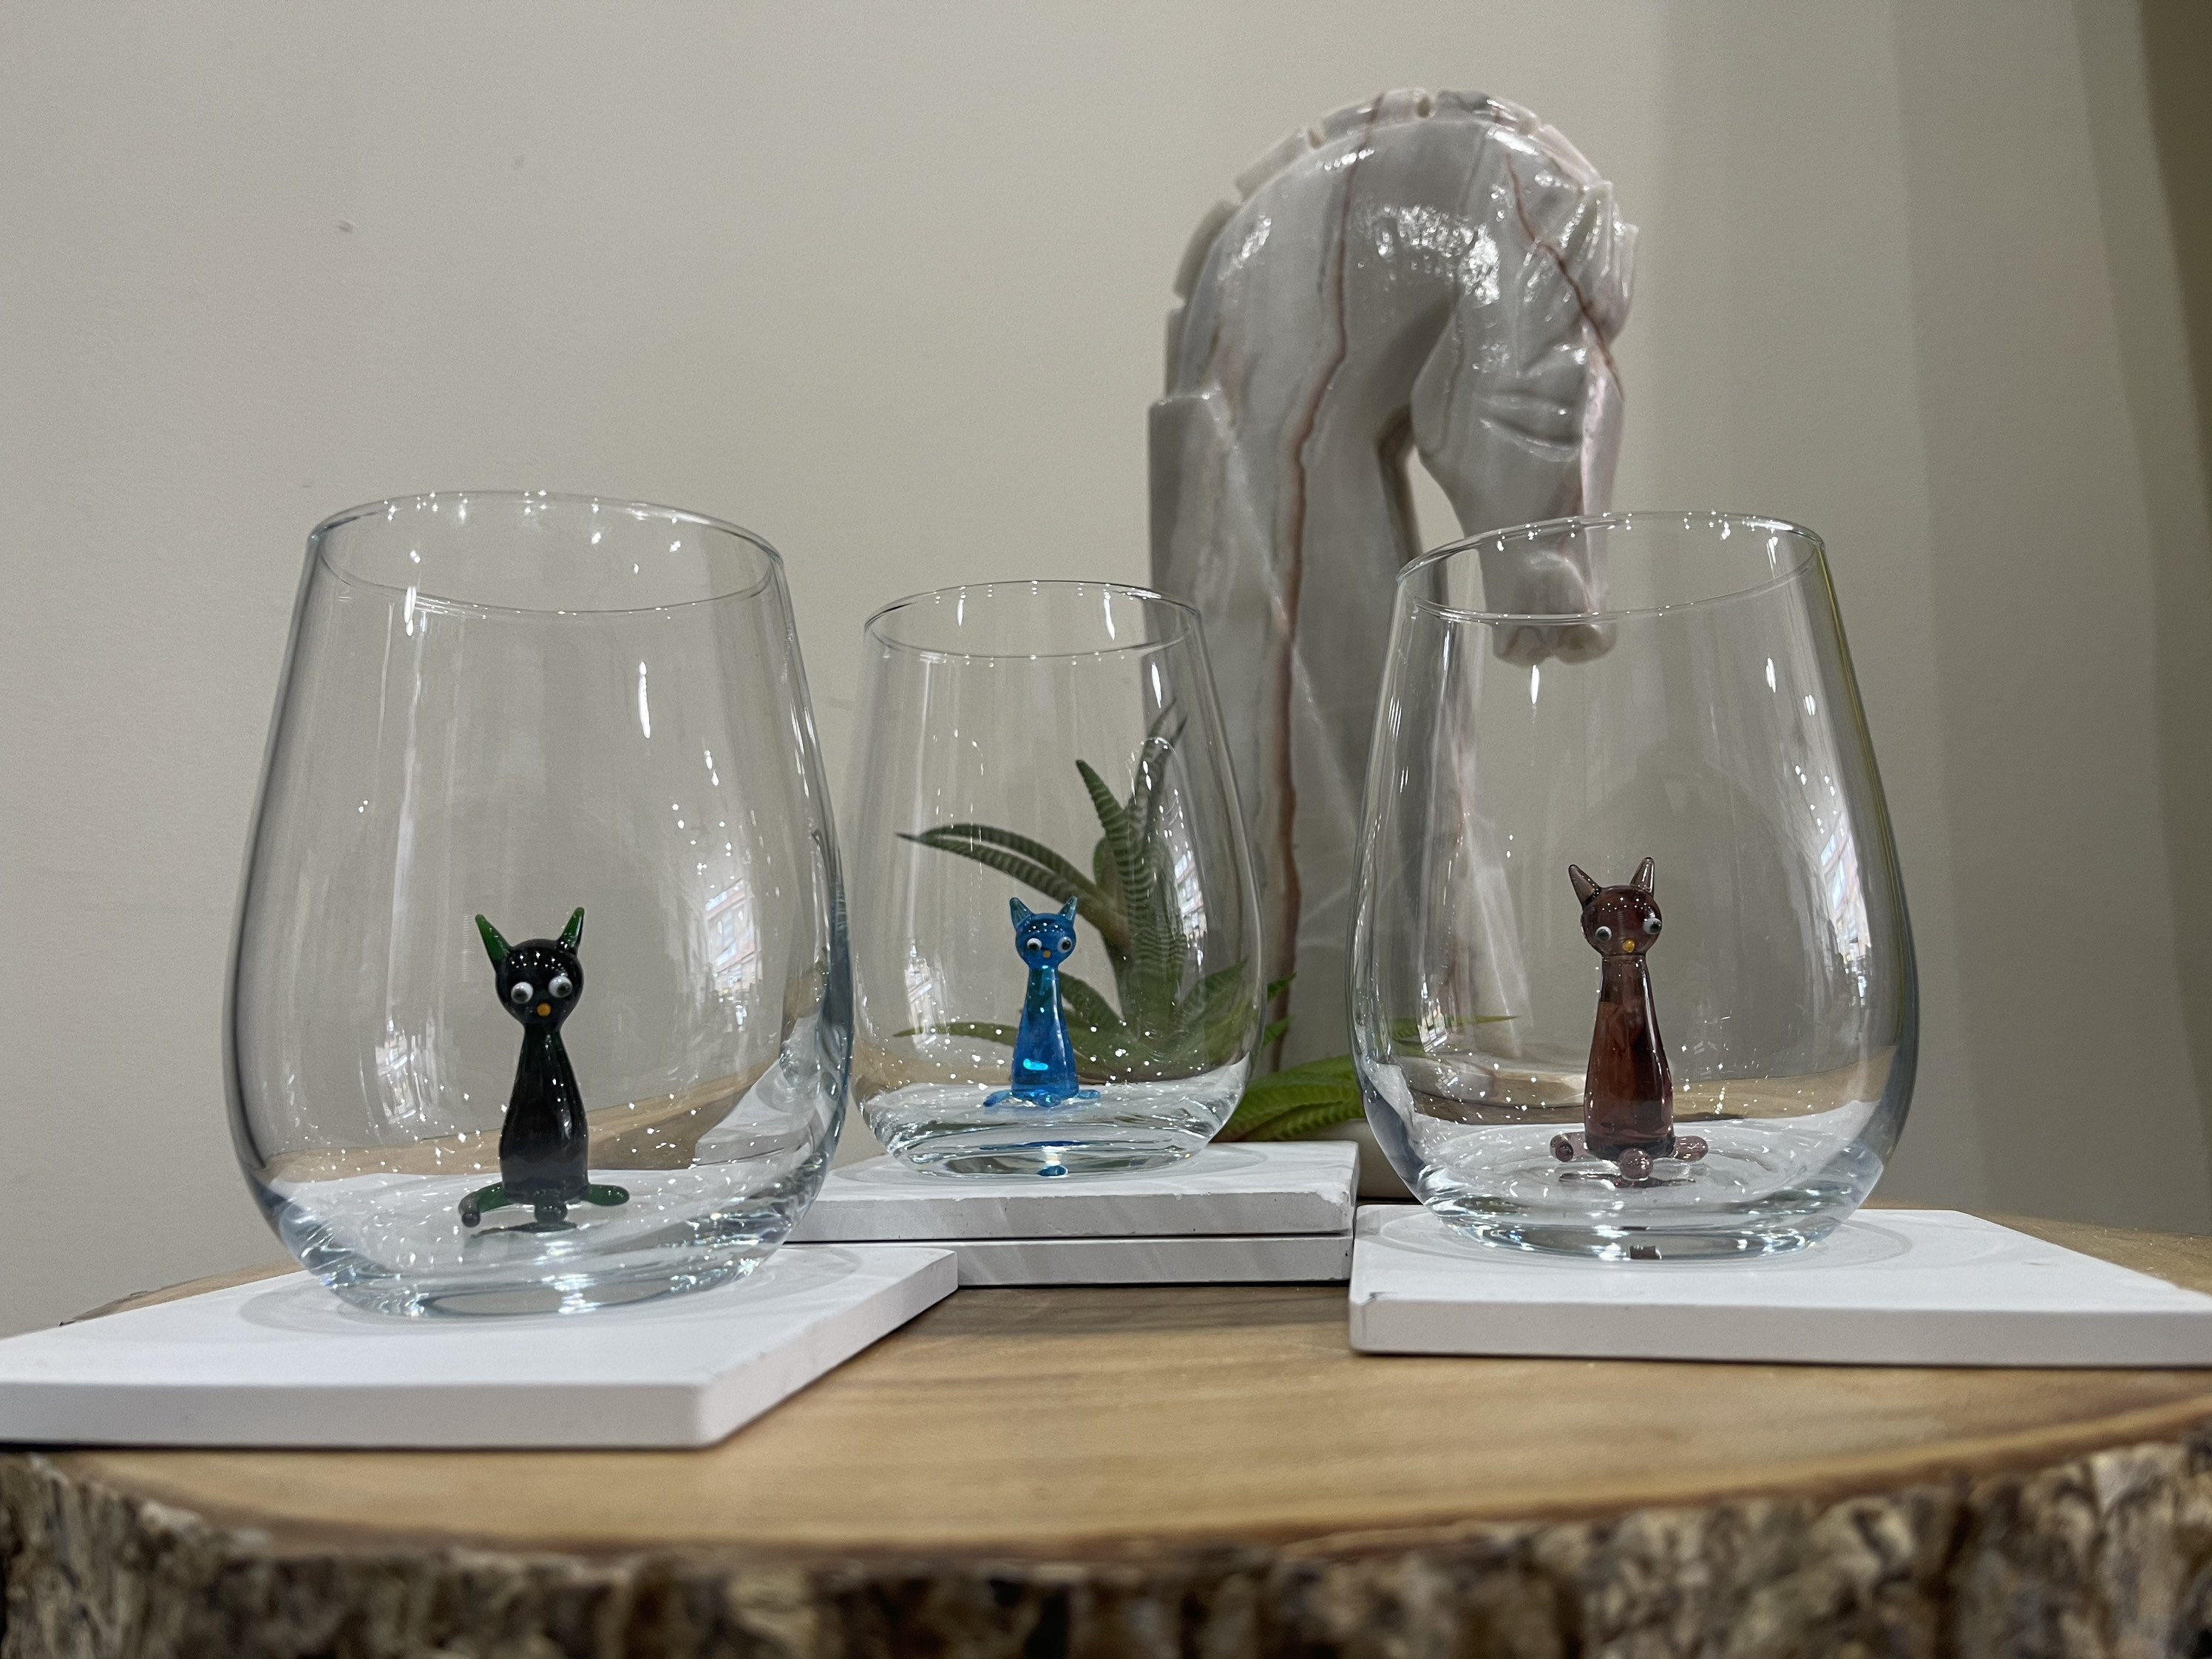 HeguSun 3D Drinking Glass Cup with Cute Animal Figurine Inside, Hand Blown Glass Christmas Deer Figure Inside Mug, Stemless Glass for Wine, Water